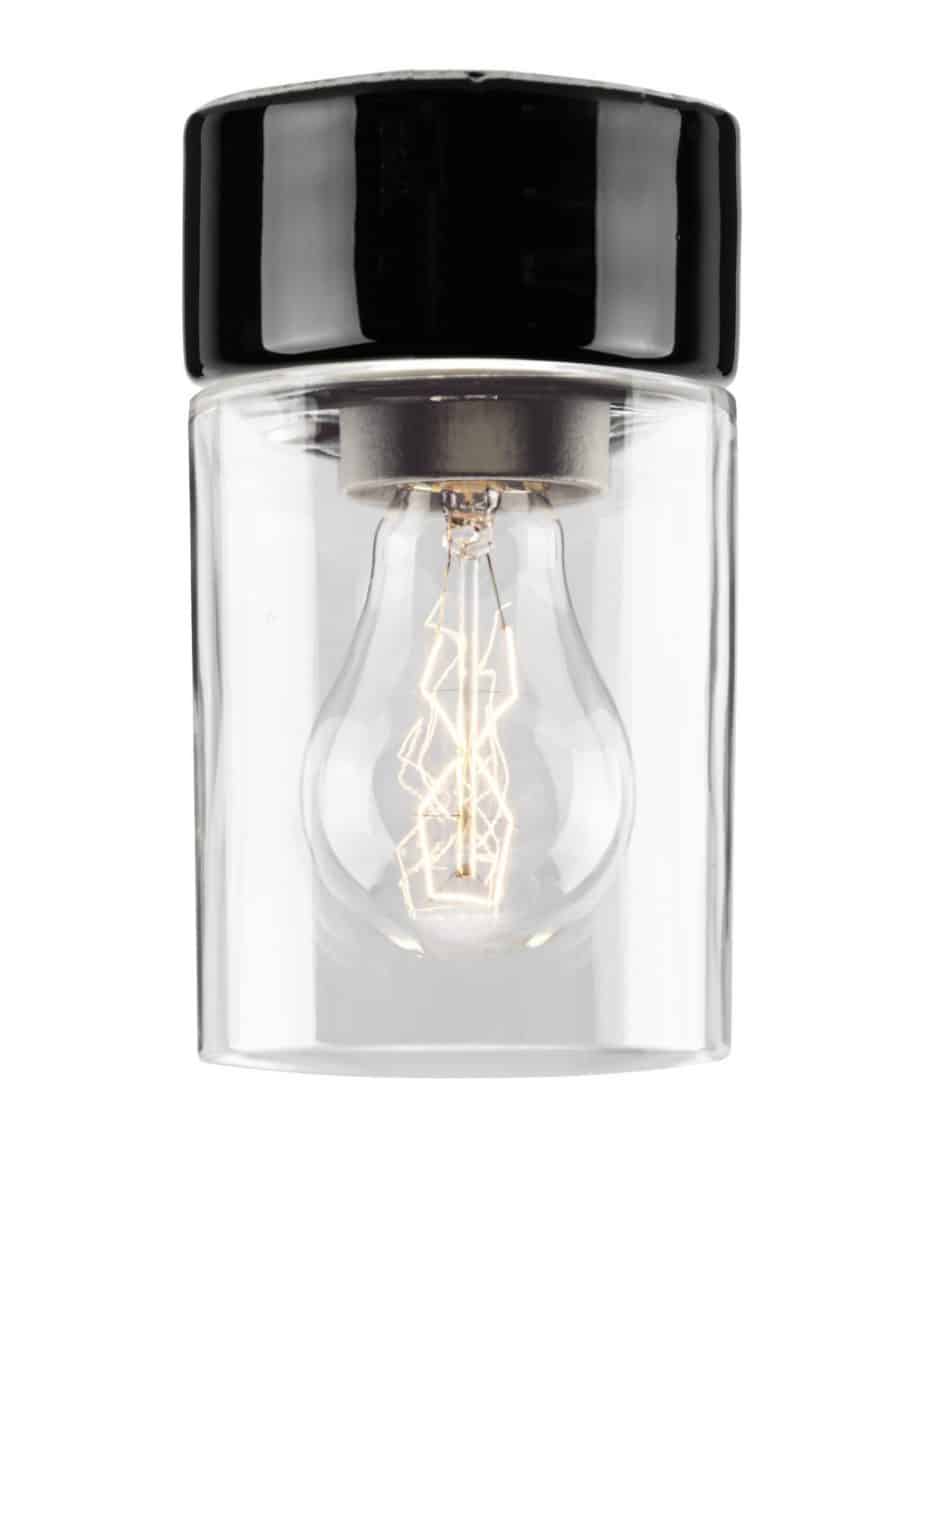 Buitenlamp Opus ifo electric zwart opus 100/175 porselein tuinextra helder glas